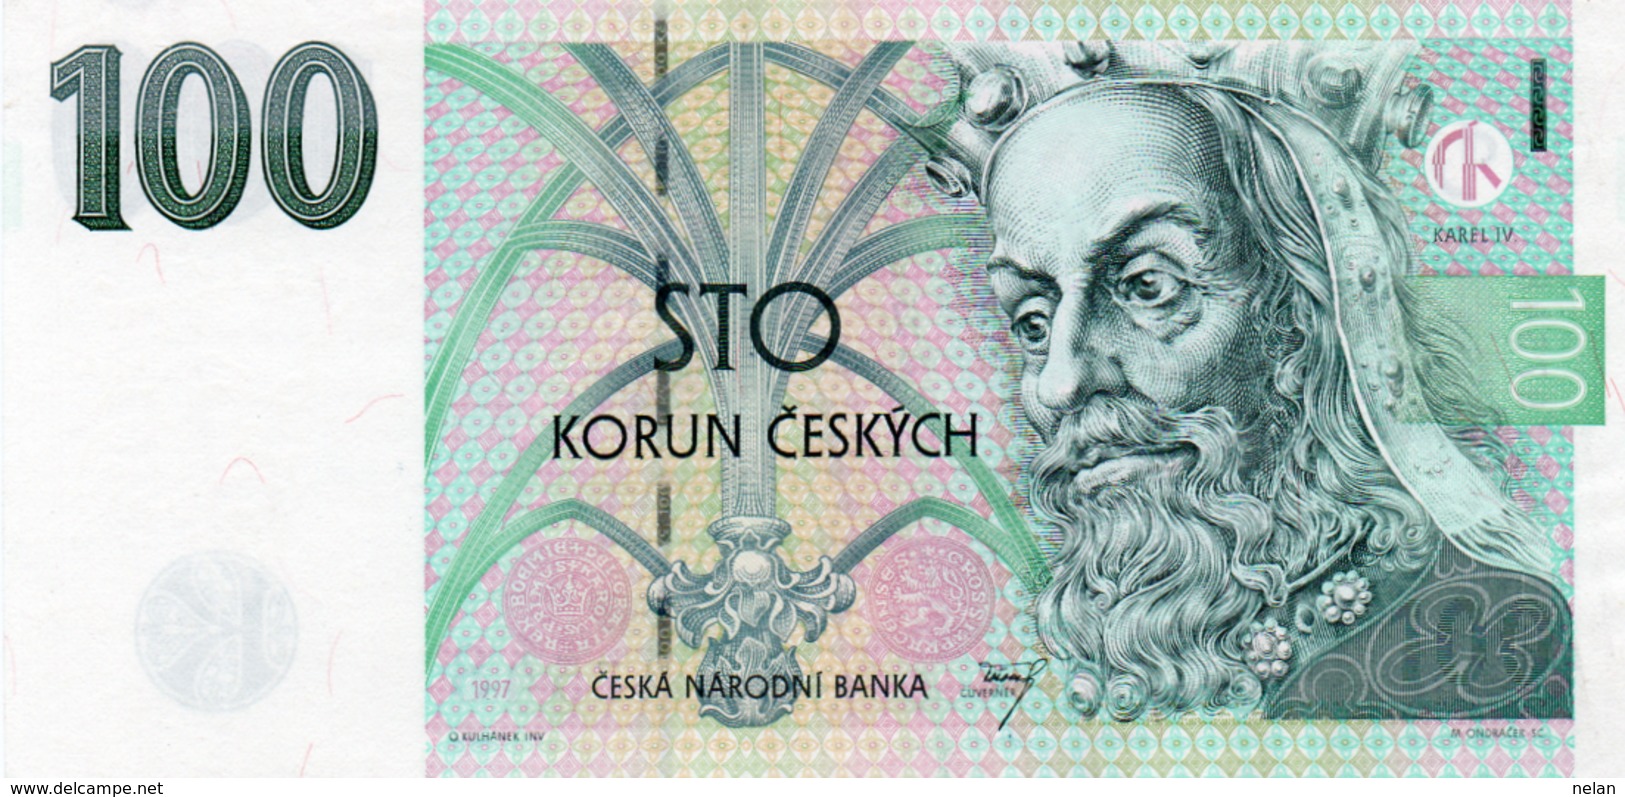 100 KORUN CESKYCH-1997 AUNC - Czech Republic